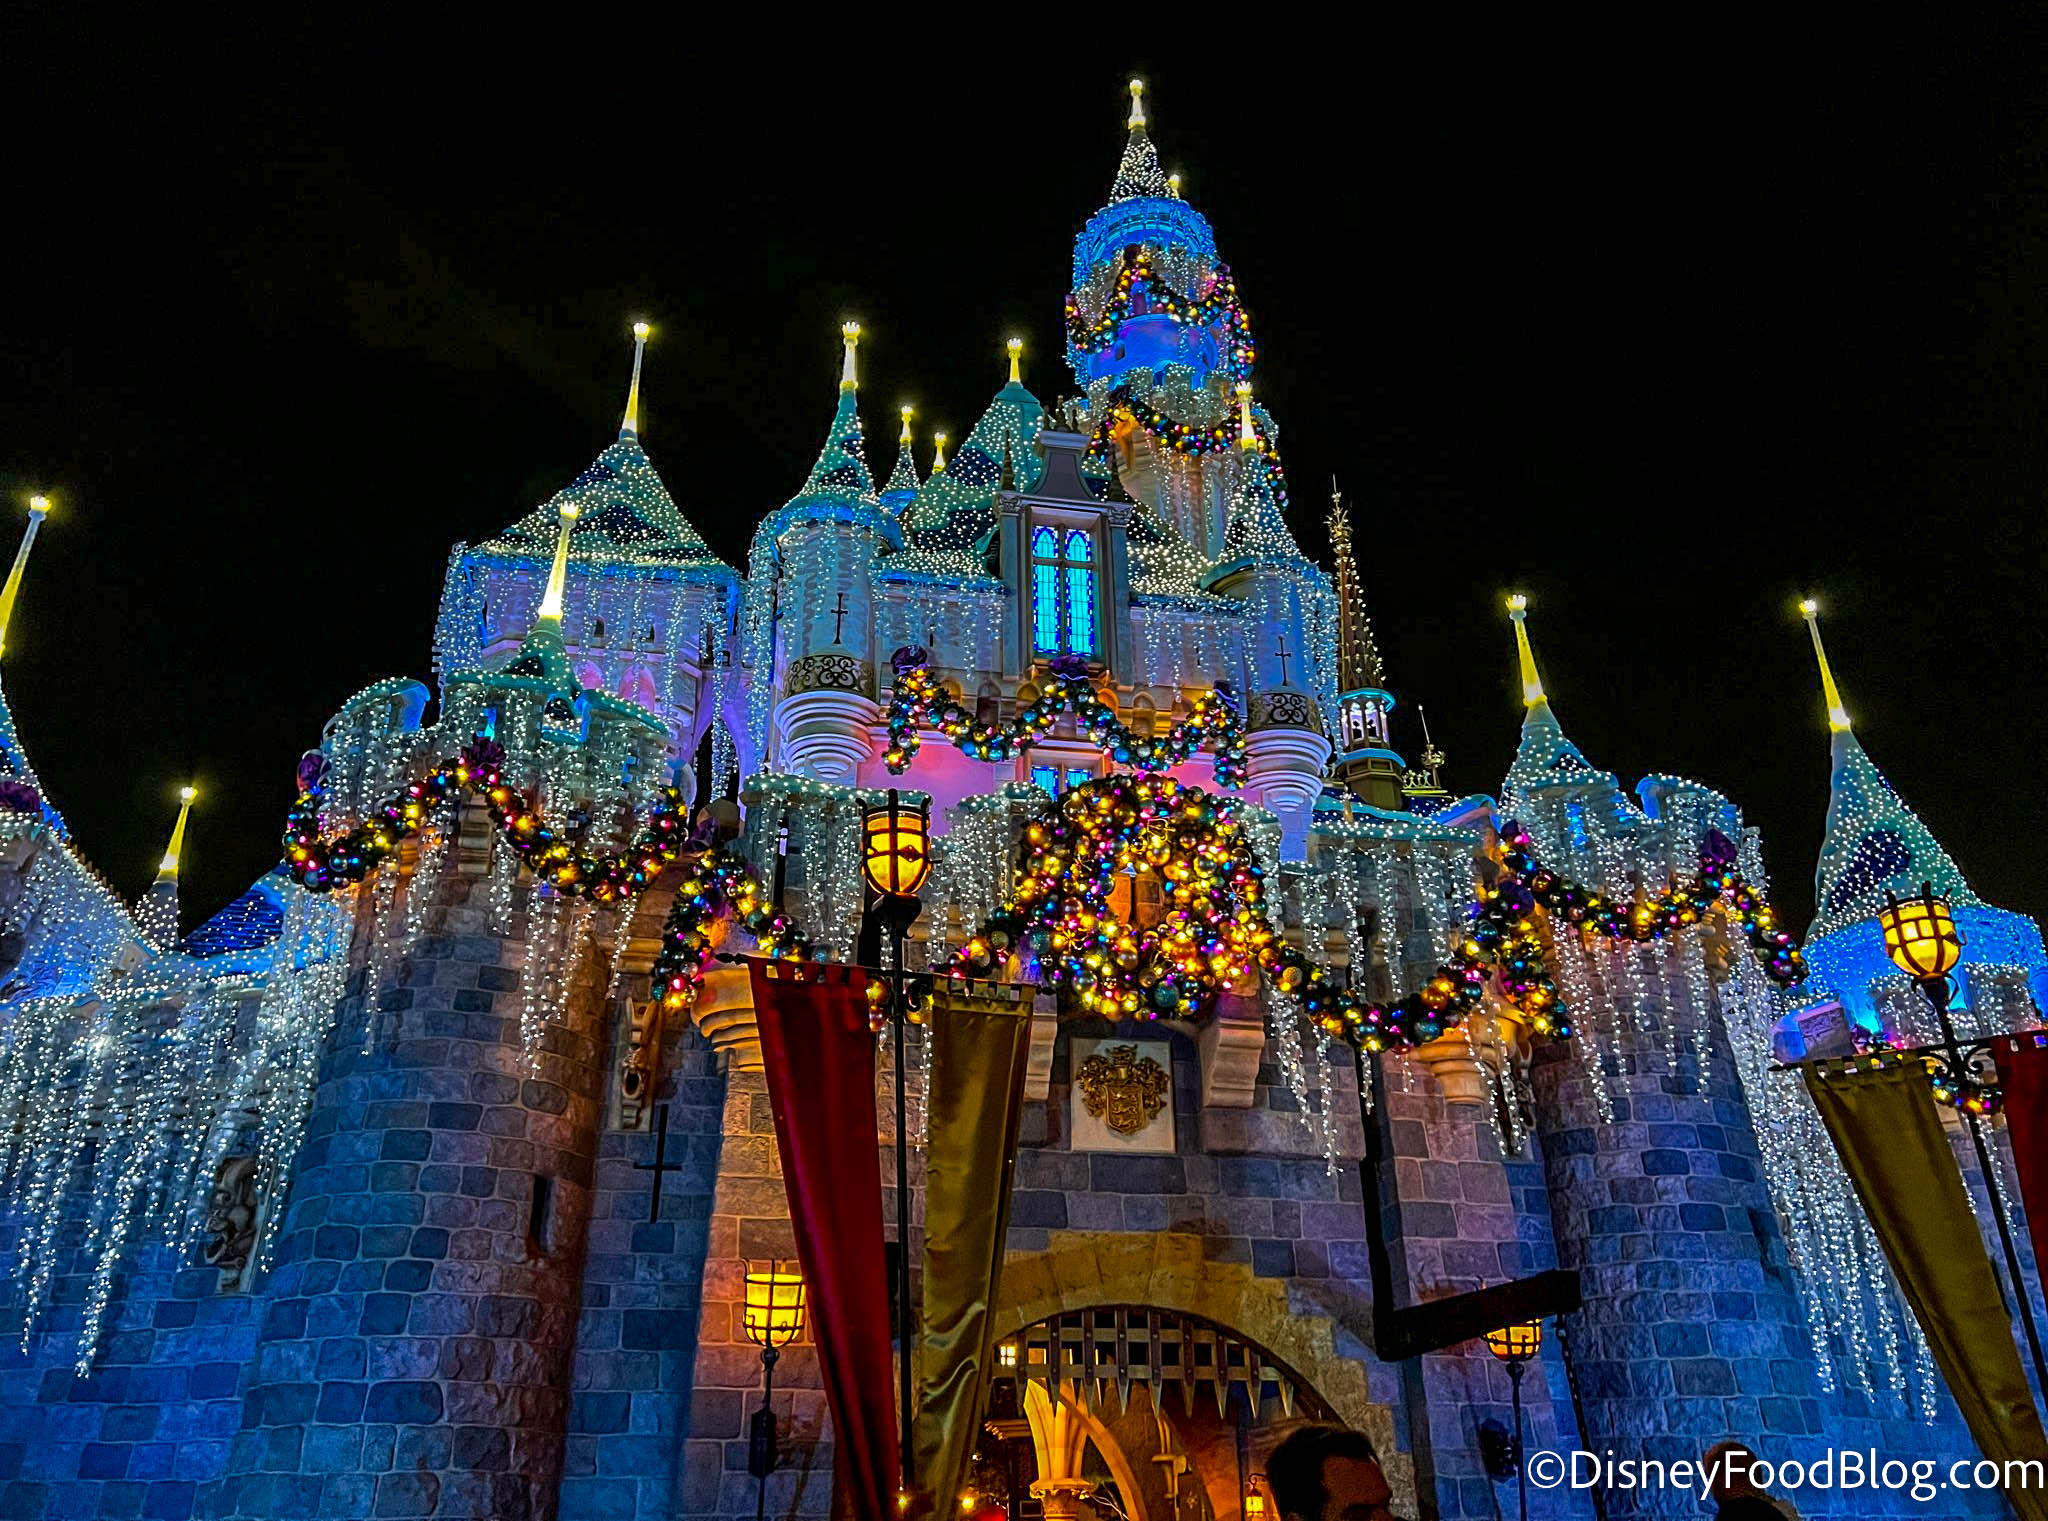 https://www.disneyfoodblog.com/wp-content/uploads/2022/12/2022-dlr-disneyland-park-sleeping-beauty-castle-nighttime-lights-holiday-decorations-3.jpg